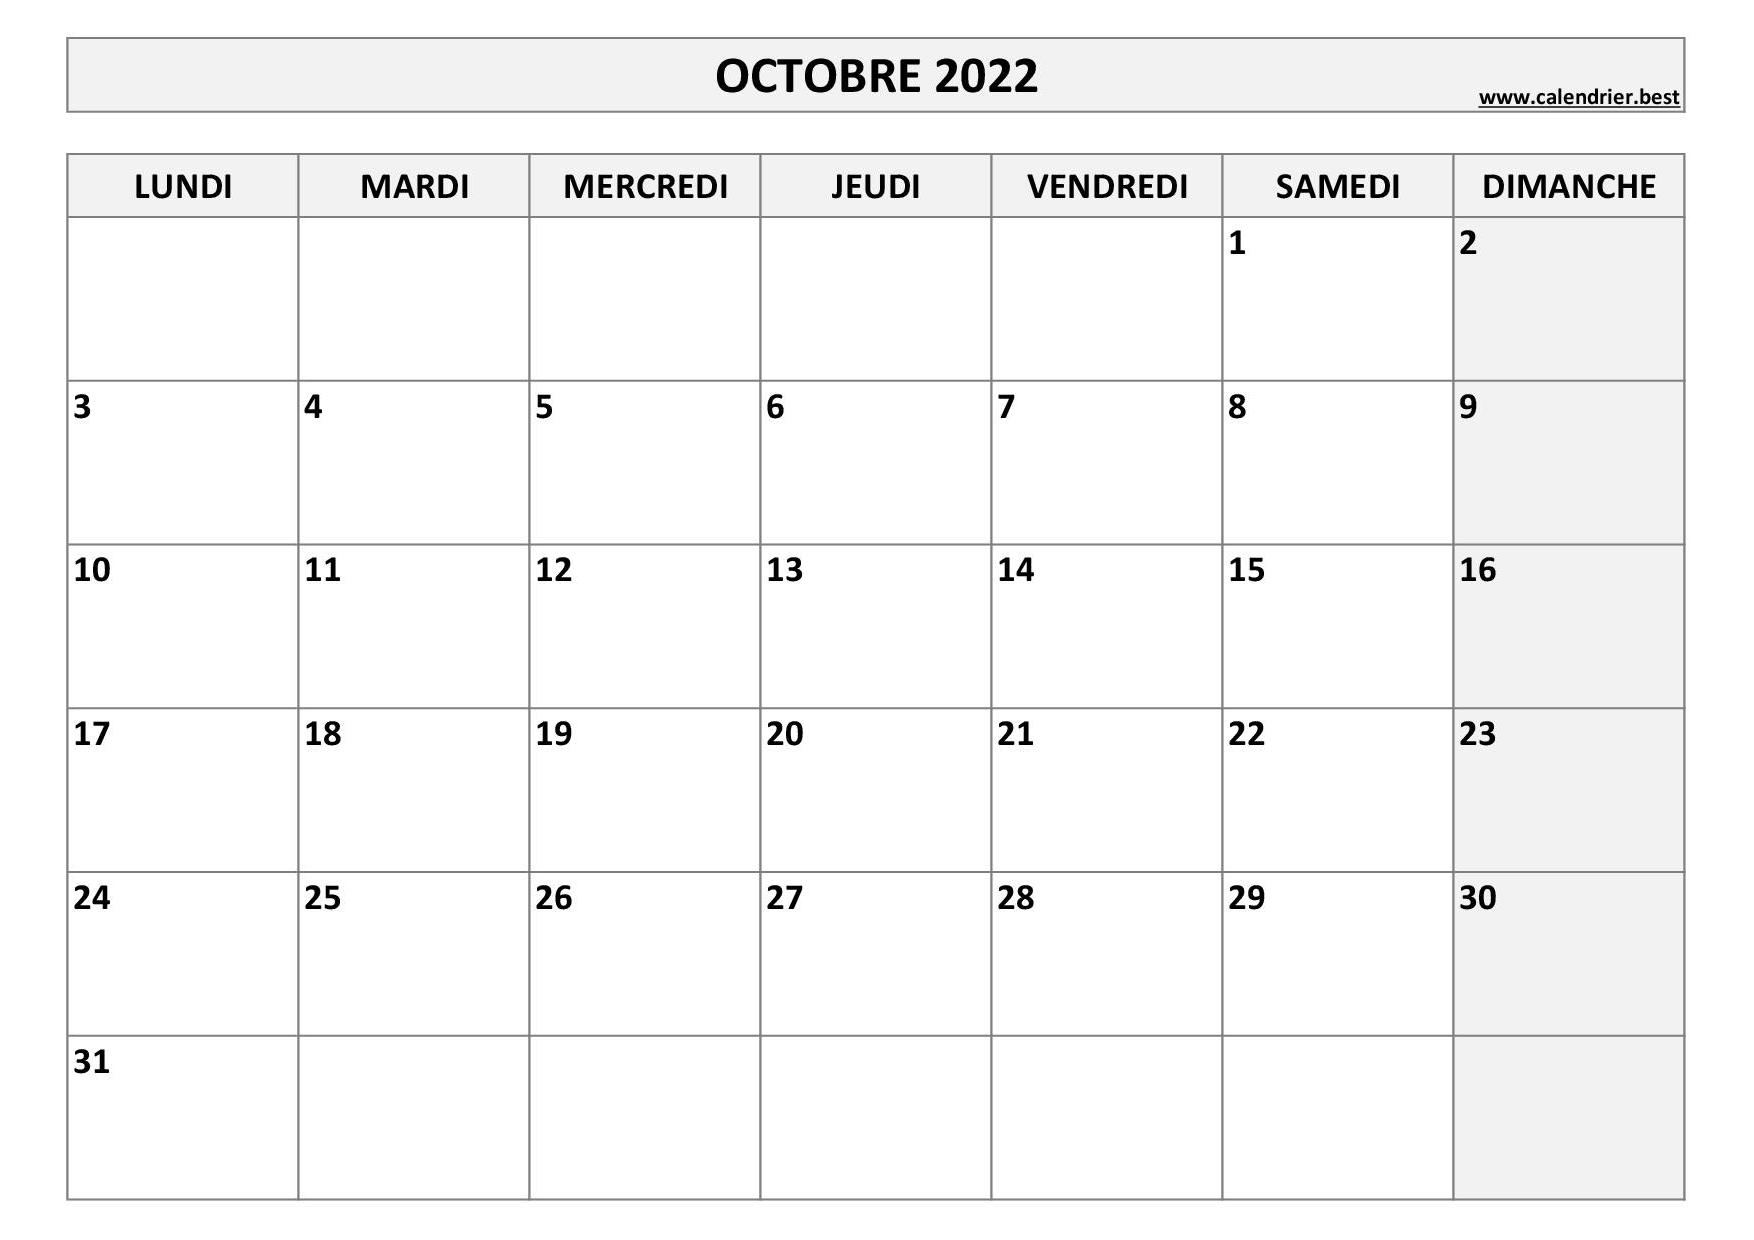 Calendrier Octobre 2022 à consulter ou imprimer -Calendrier.best